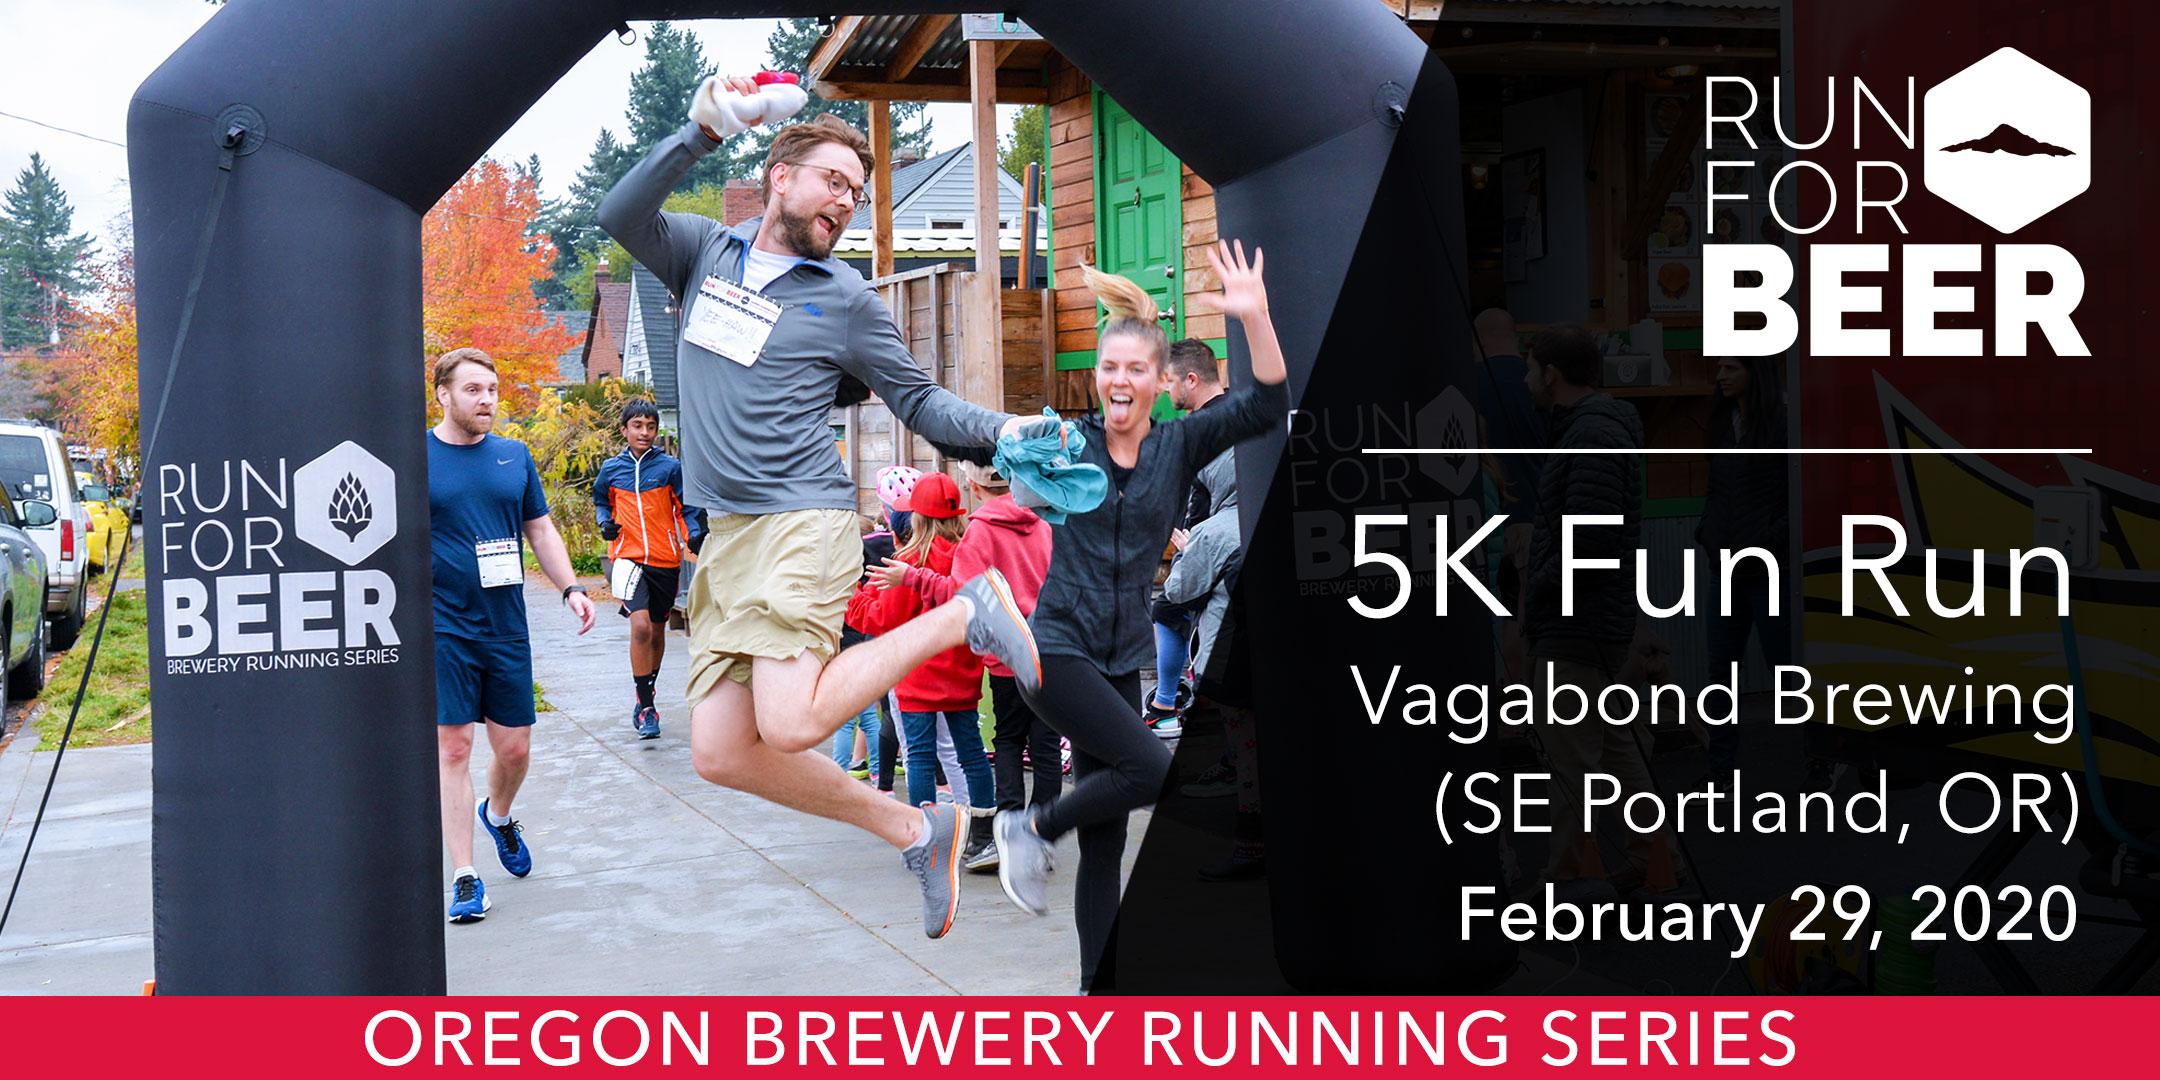 Vagabond Brewing 5k Fun Run